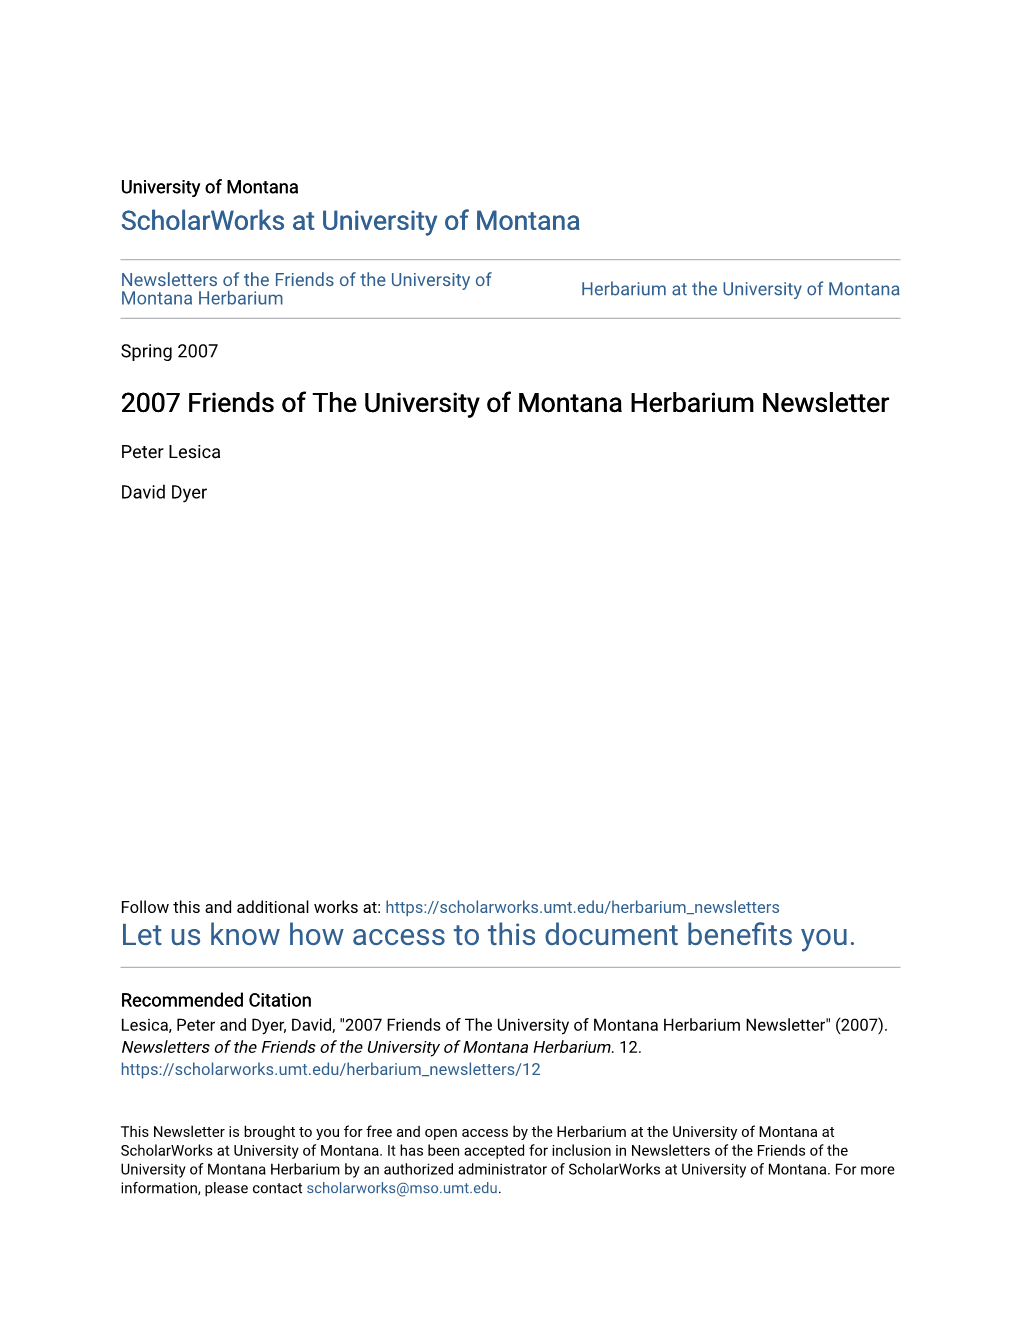 2007 Friends of the University of Montana Herbarium Newsletter